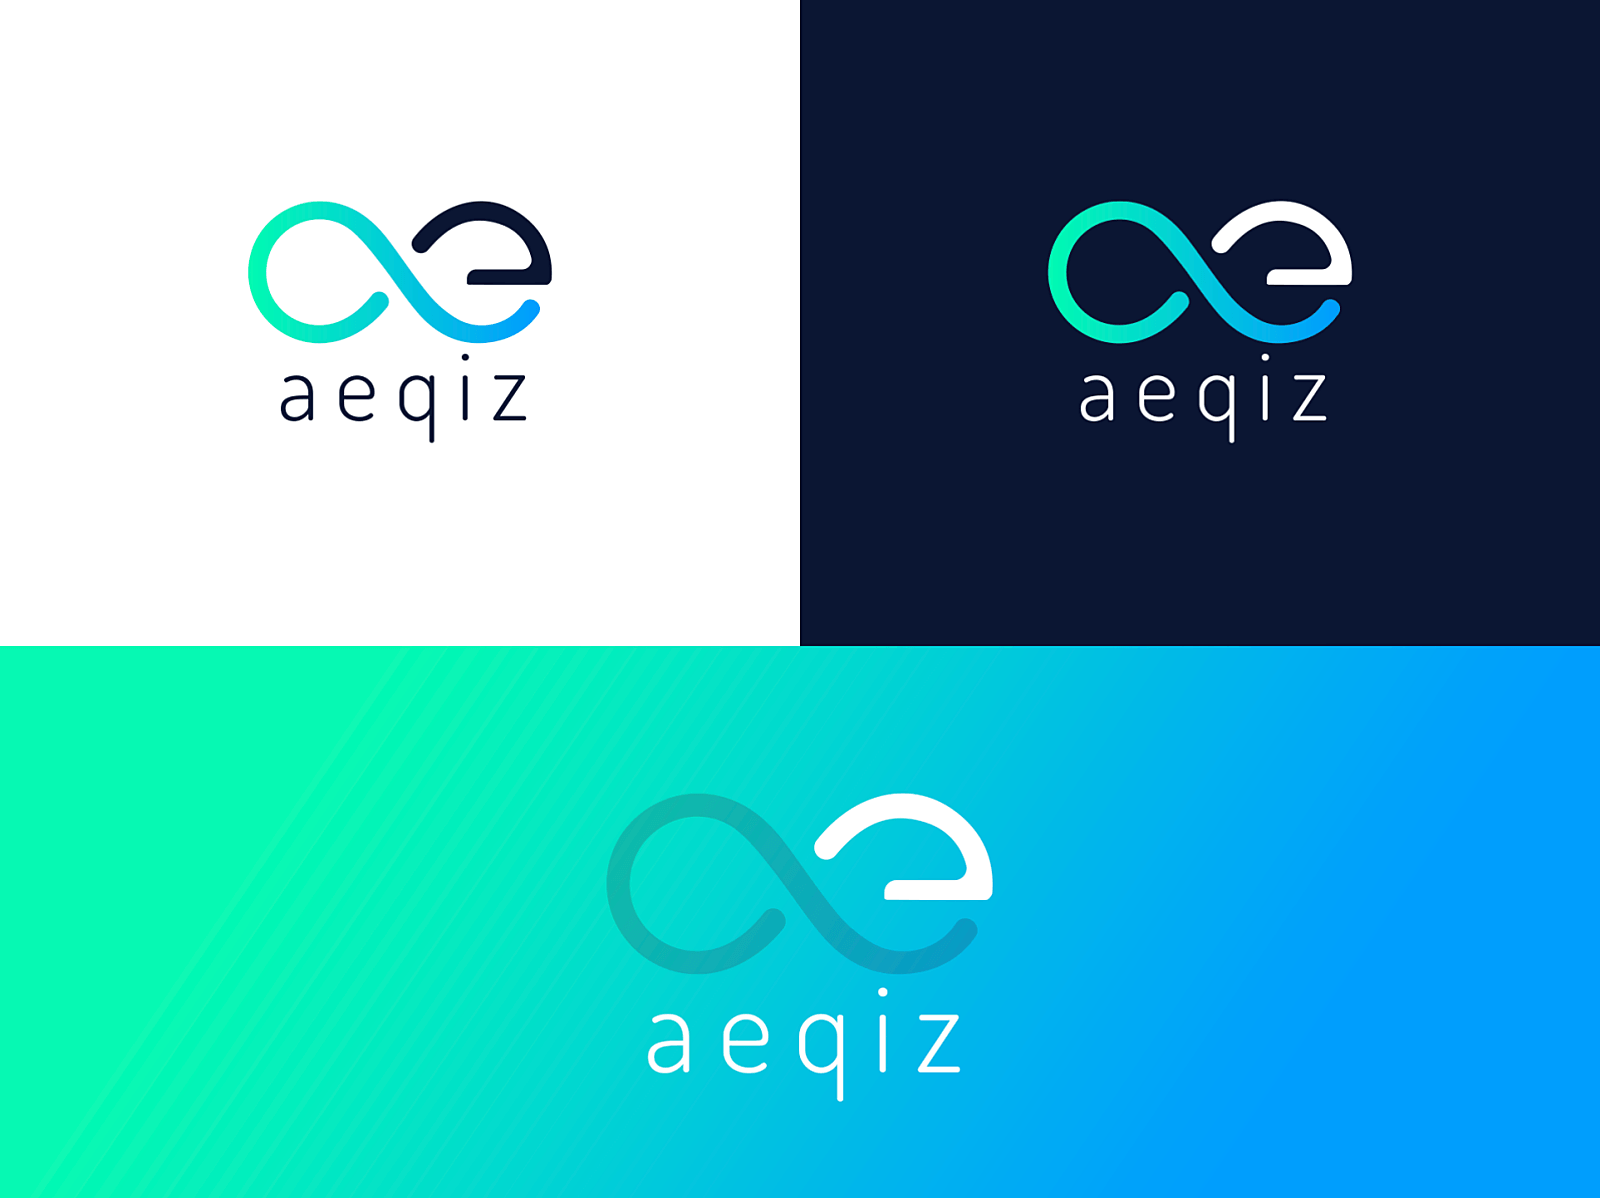 2nd Logo - aeqiz logo design concept 2 by Sarvottam Ghosh on Dribbble